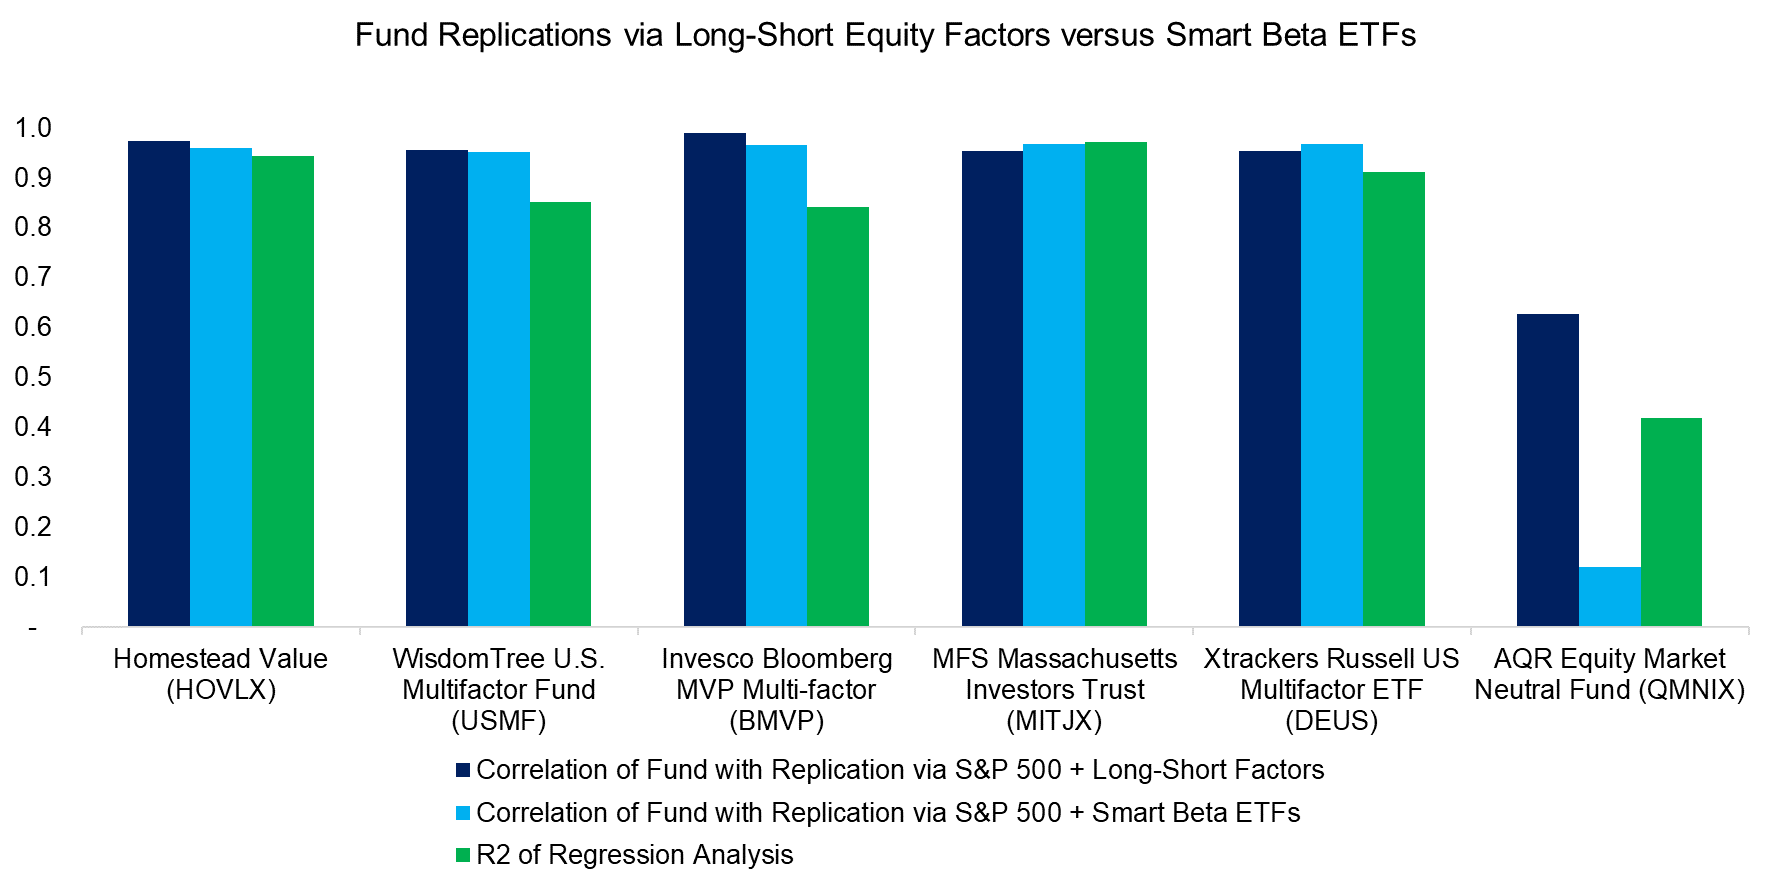 Fund Replications via Long-Short Equity Factors versus Smart Beta ETFs